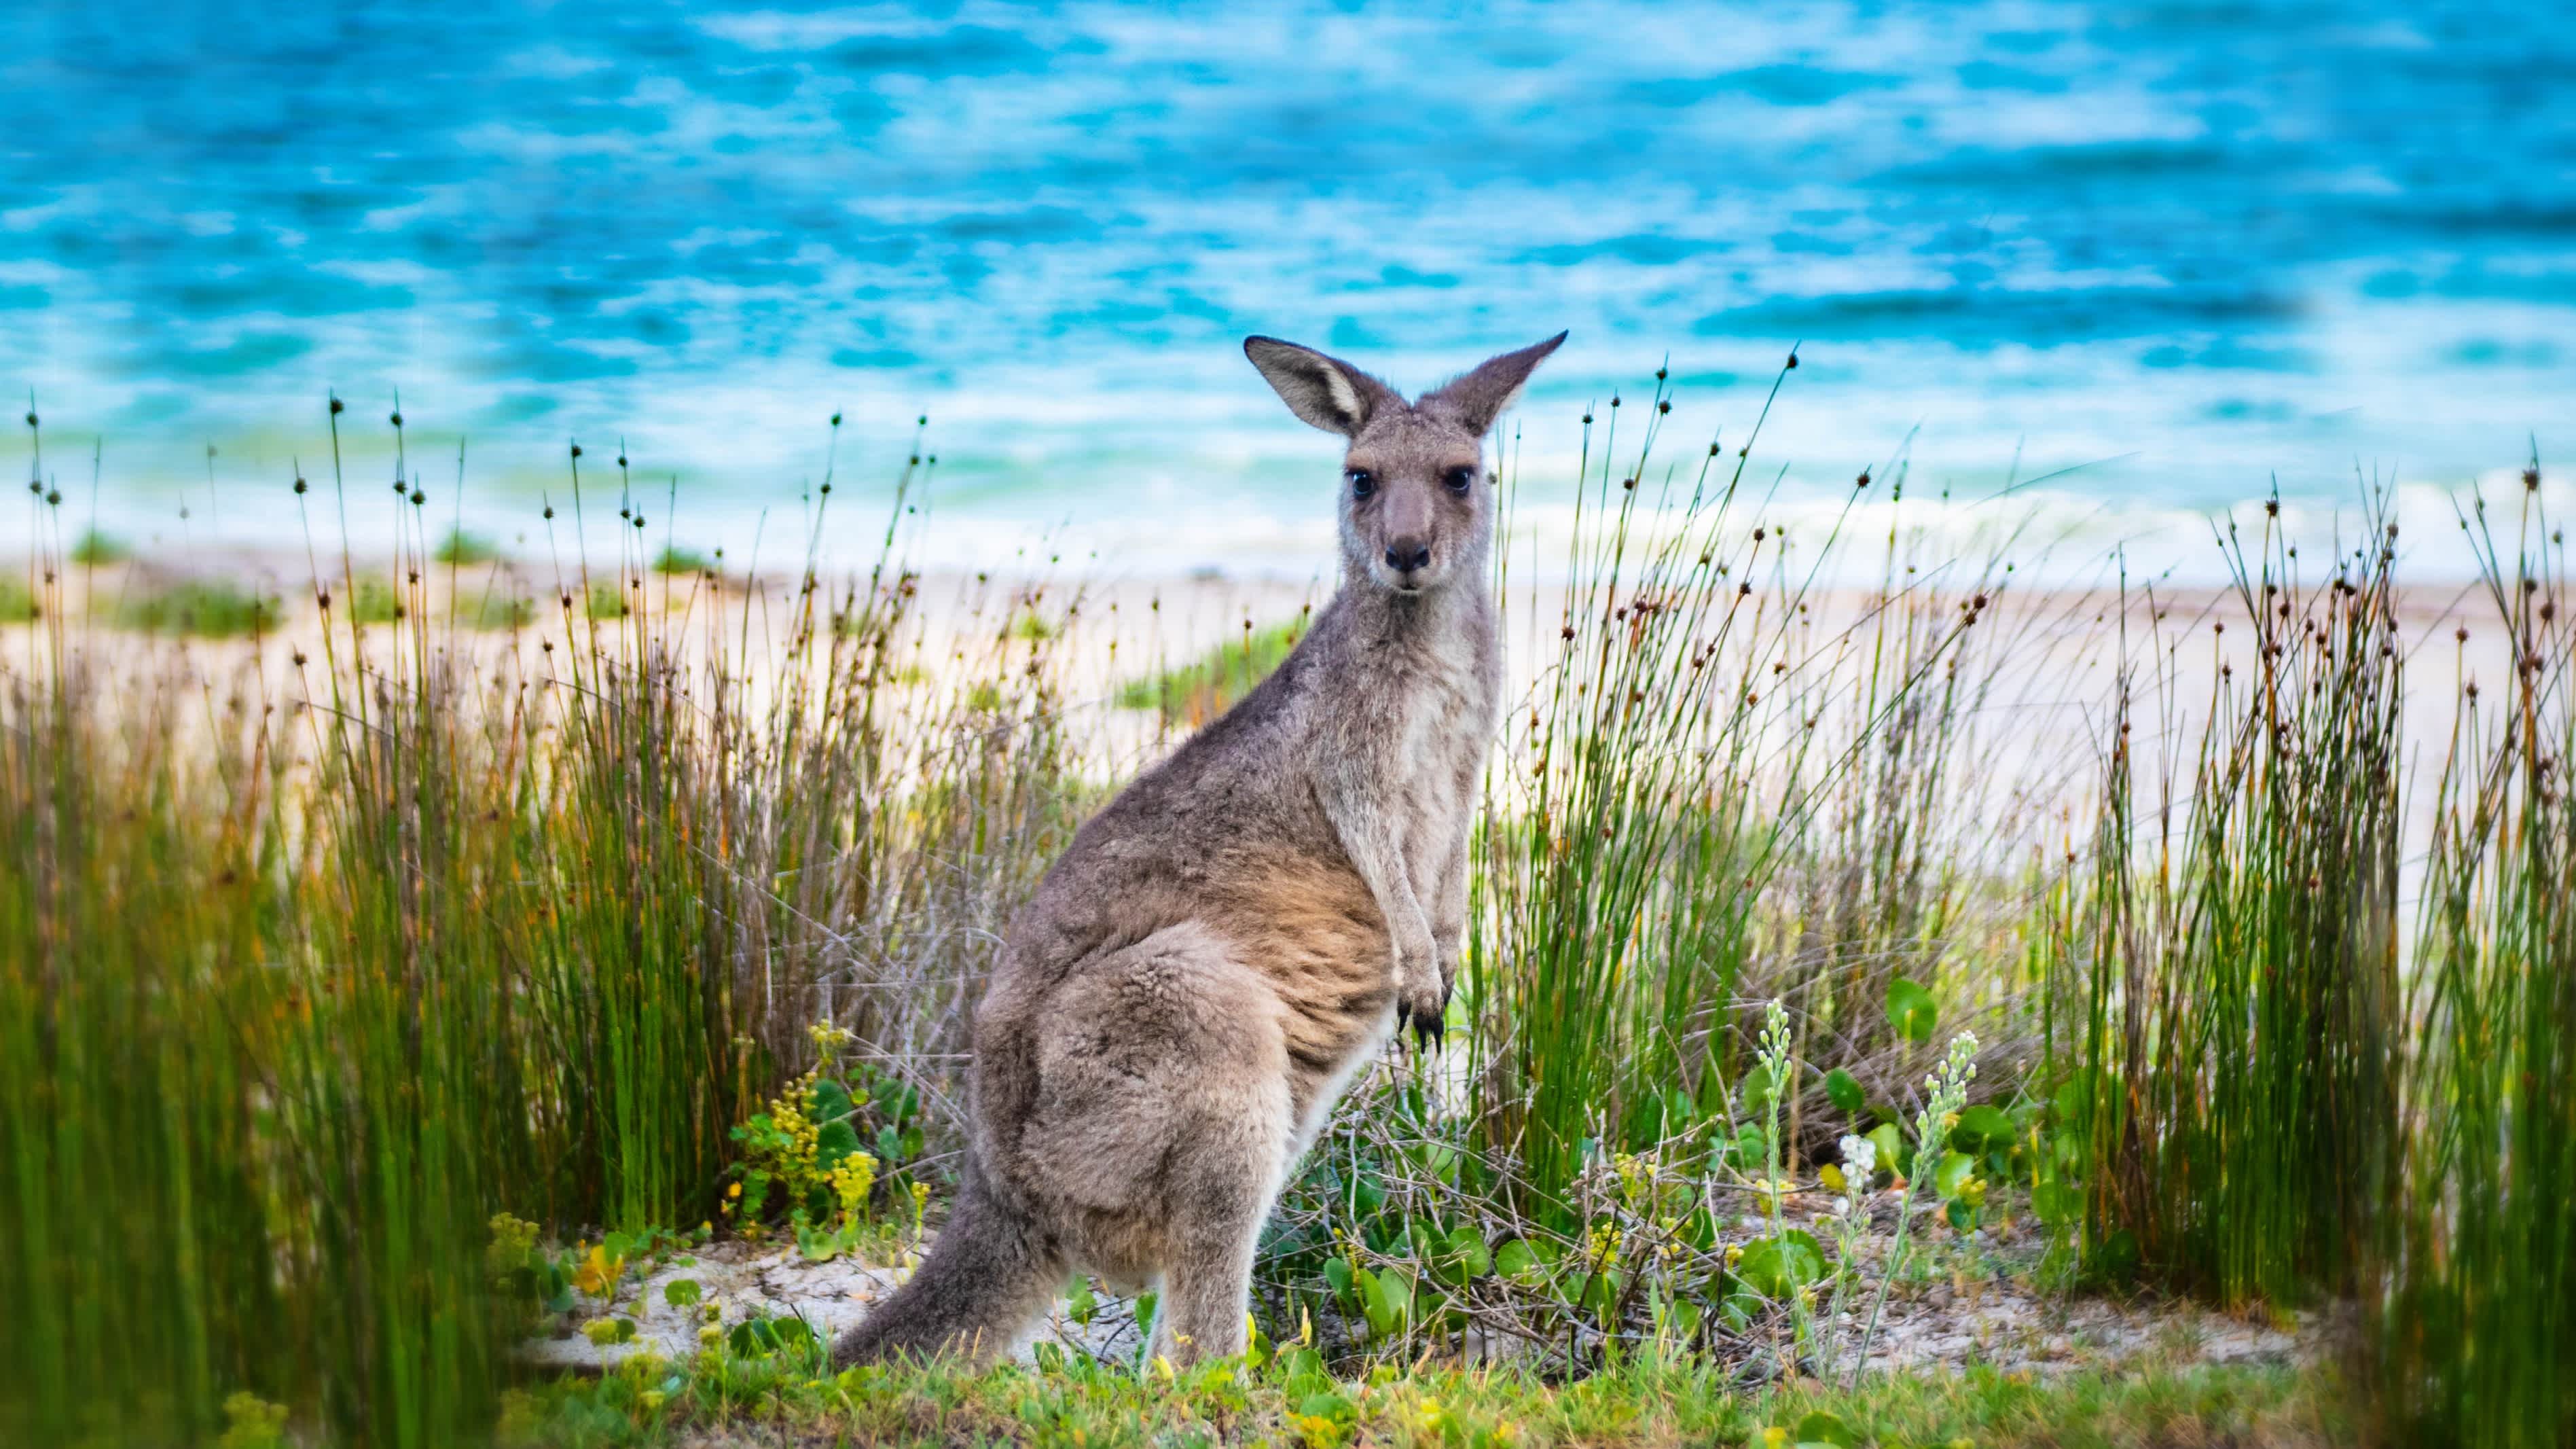 Känguru am Strand